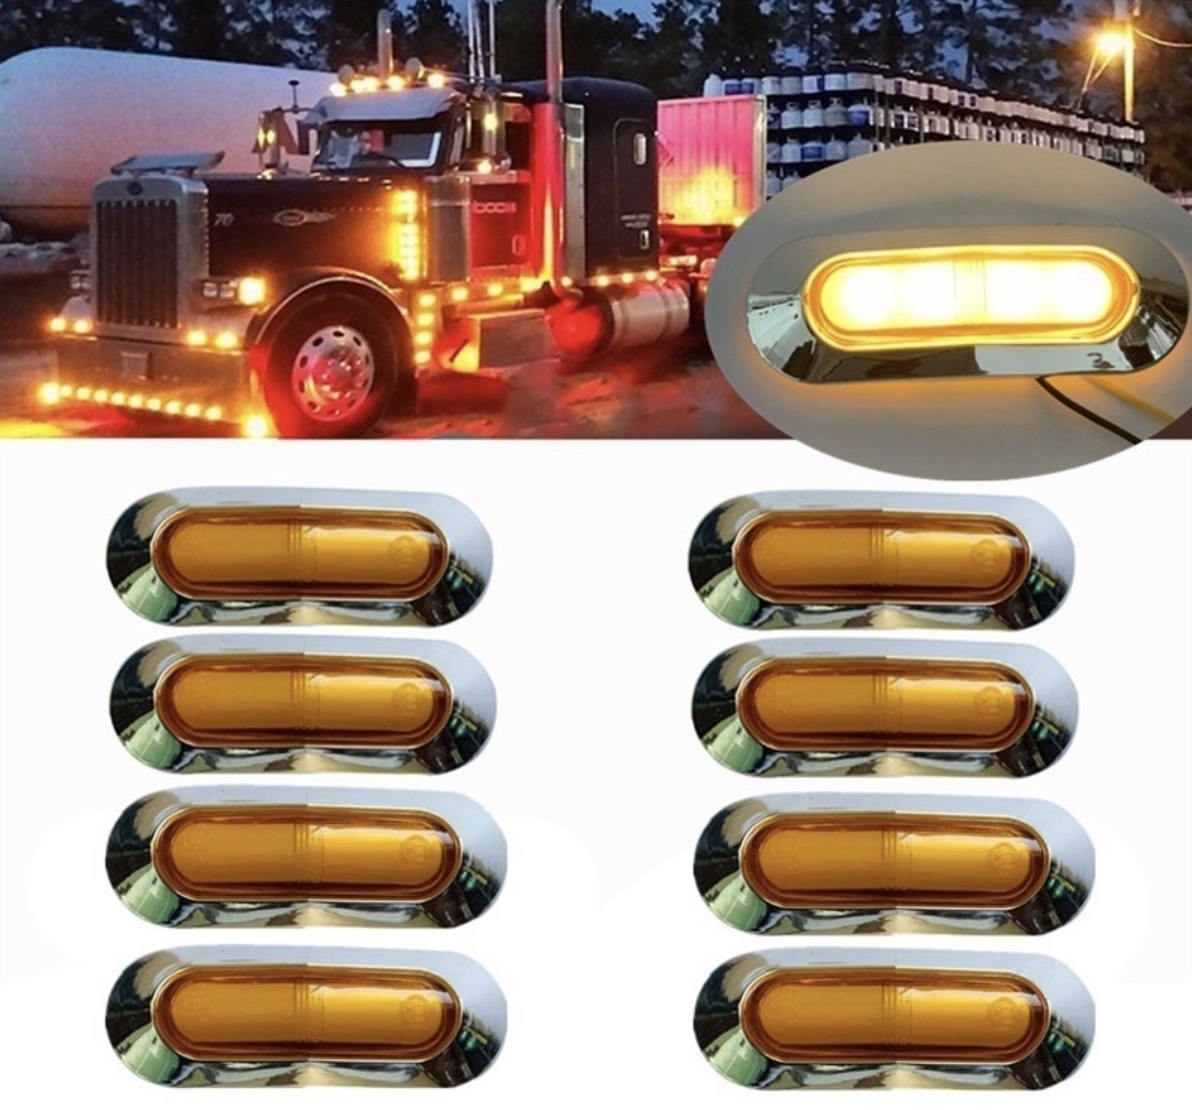 SALE!!【新品】トラック照明 LEDサイドライト トレーラー照明 9.3*3.3*1.9cm アウトラインマーカーランプ 12-24V 装飾 琥珀色 8灯セット_画像1